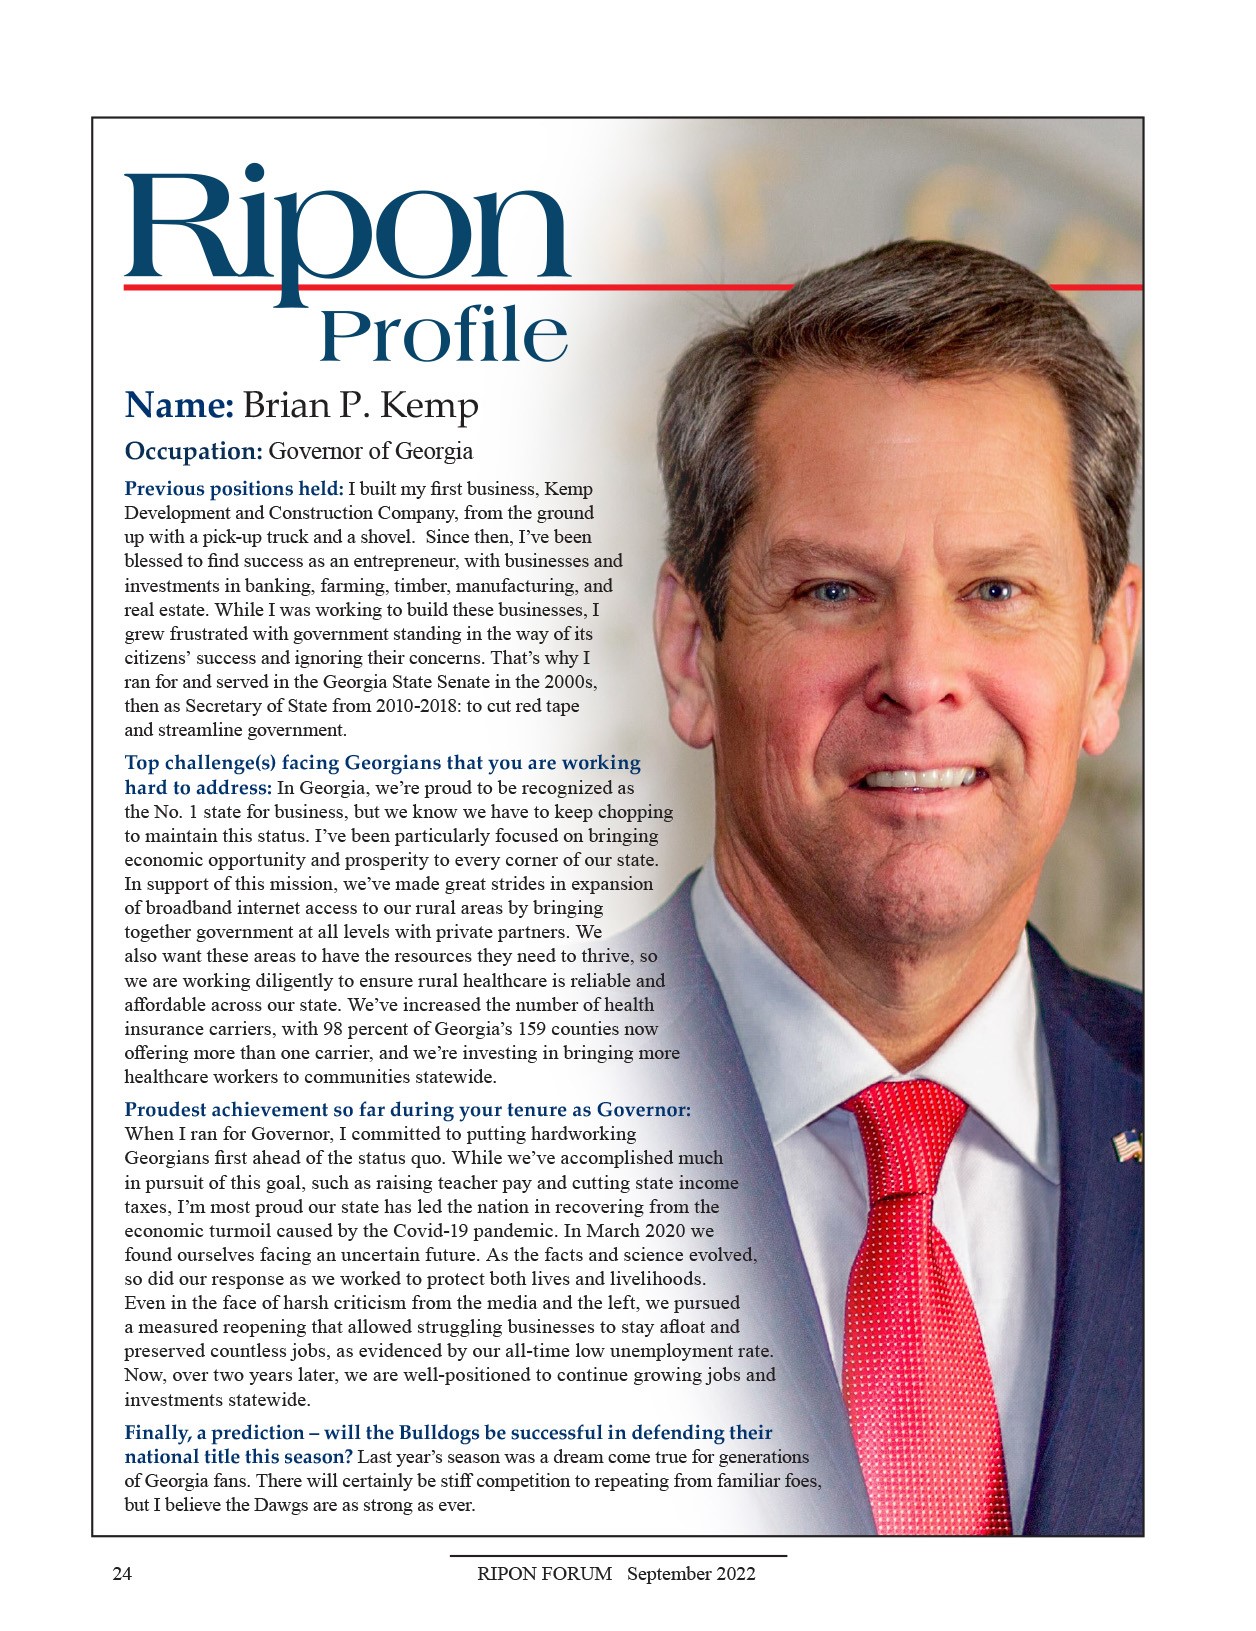 Ripon Profile of Brian Kemp